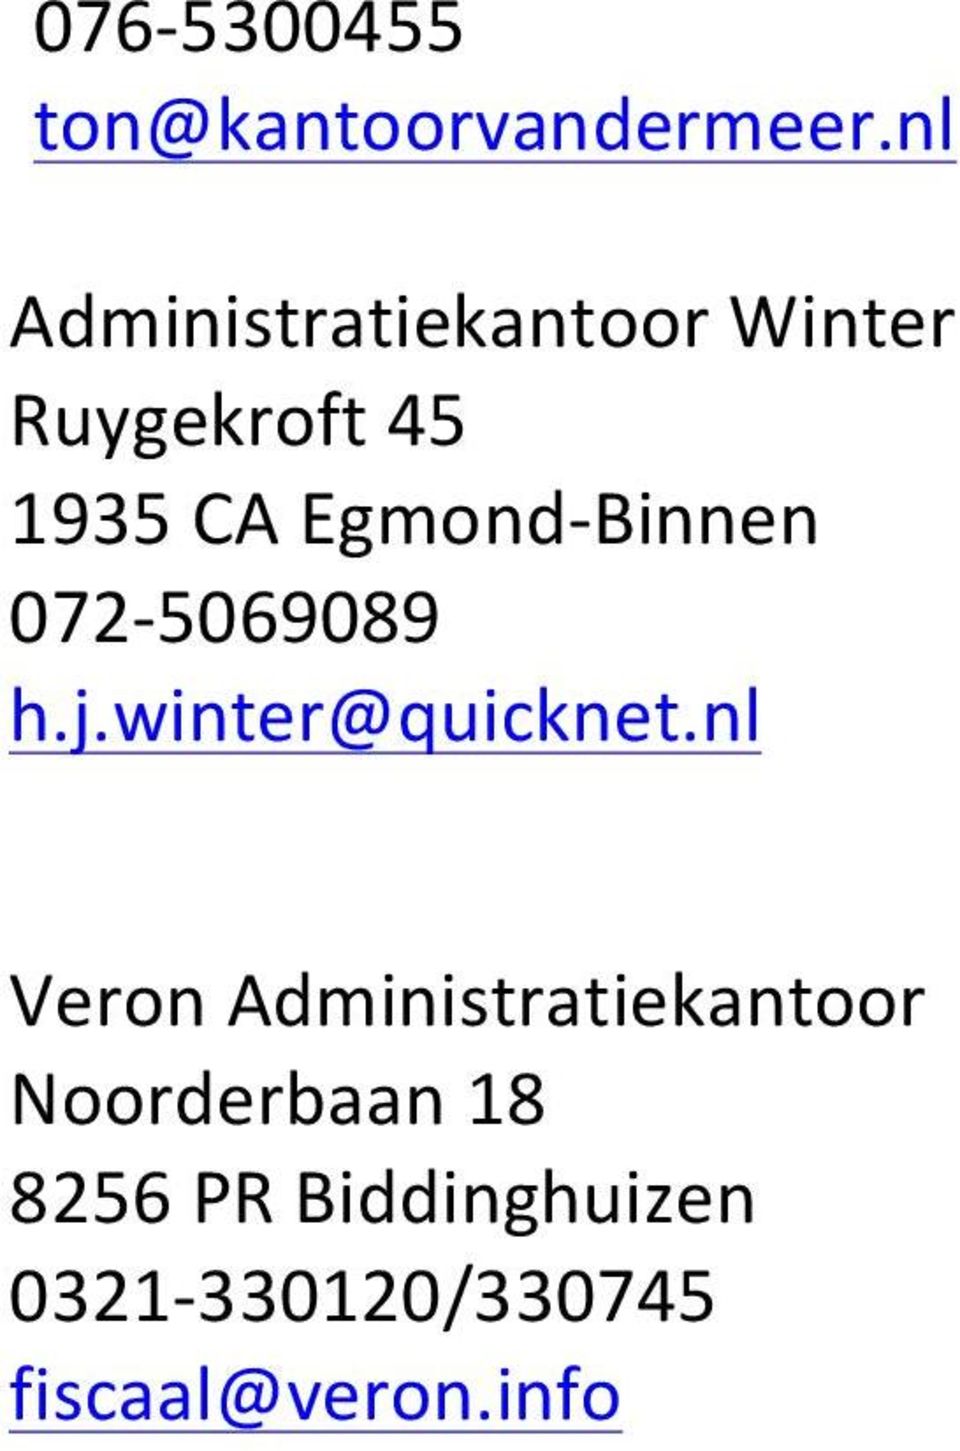 Egmond- Binnen 072-5069089 h.j.winter@quicknet.